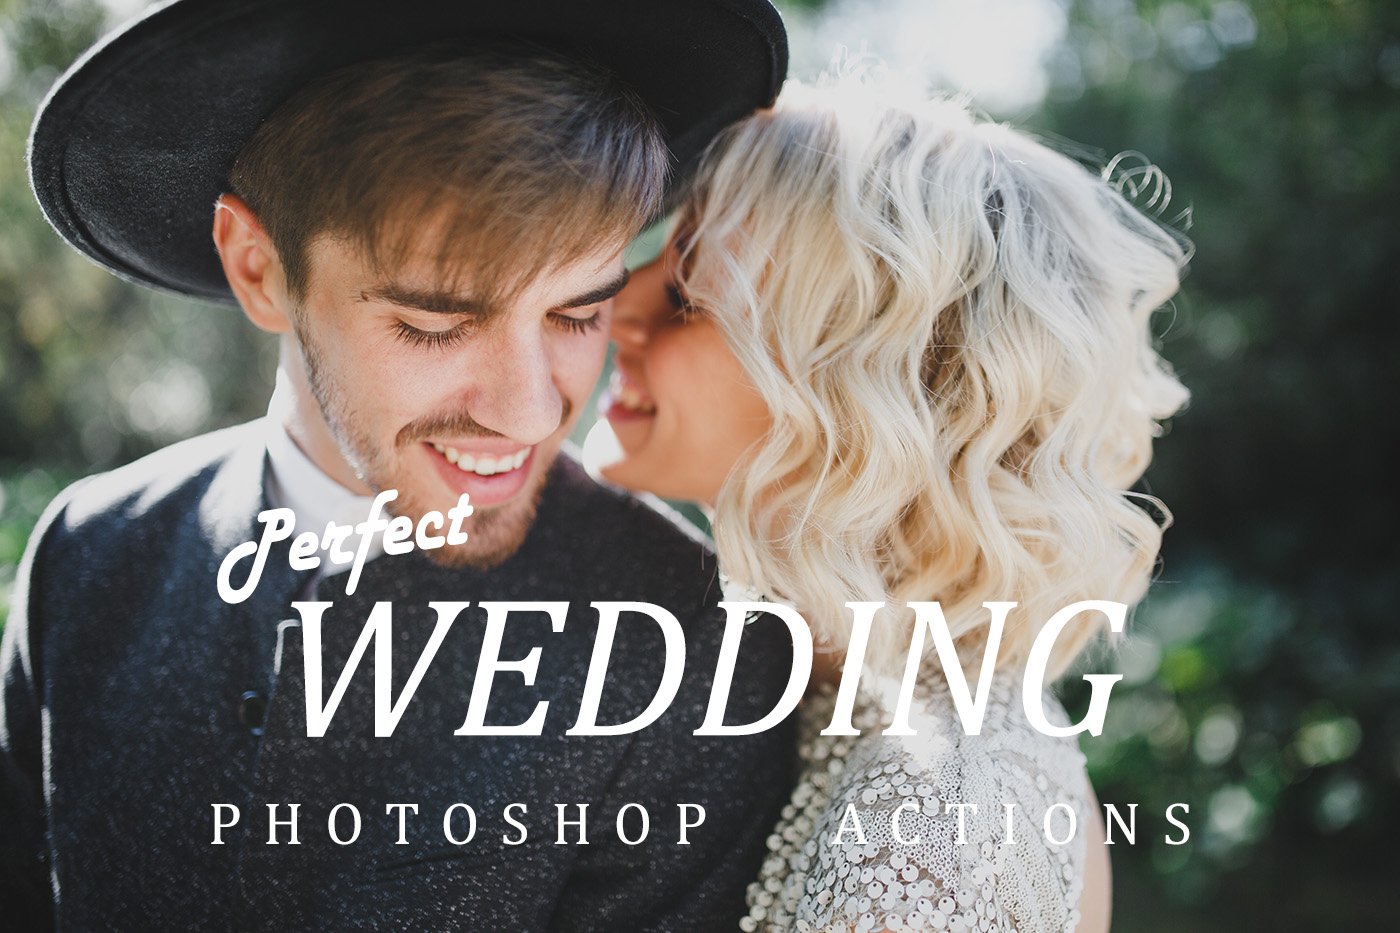 Photoshop Wedding Actionscover image.